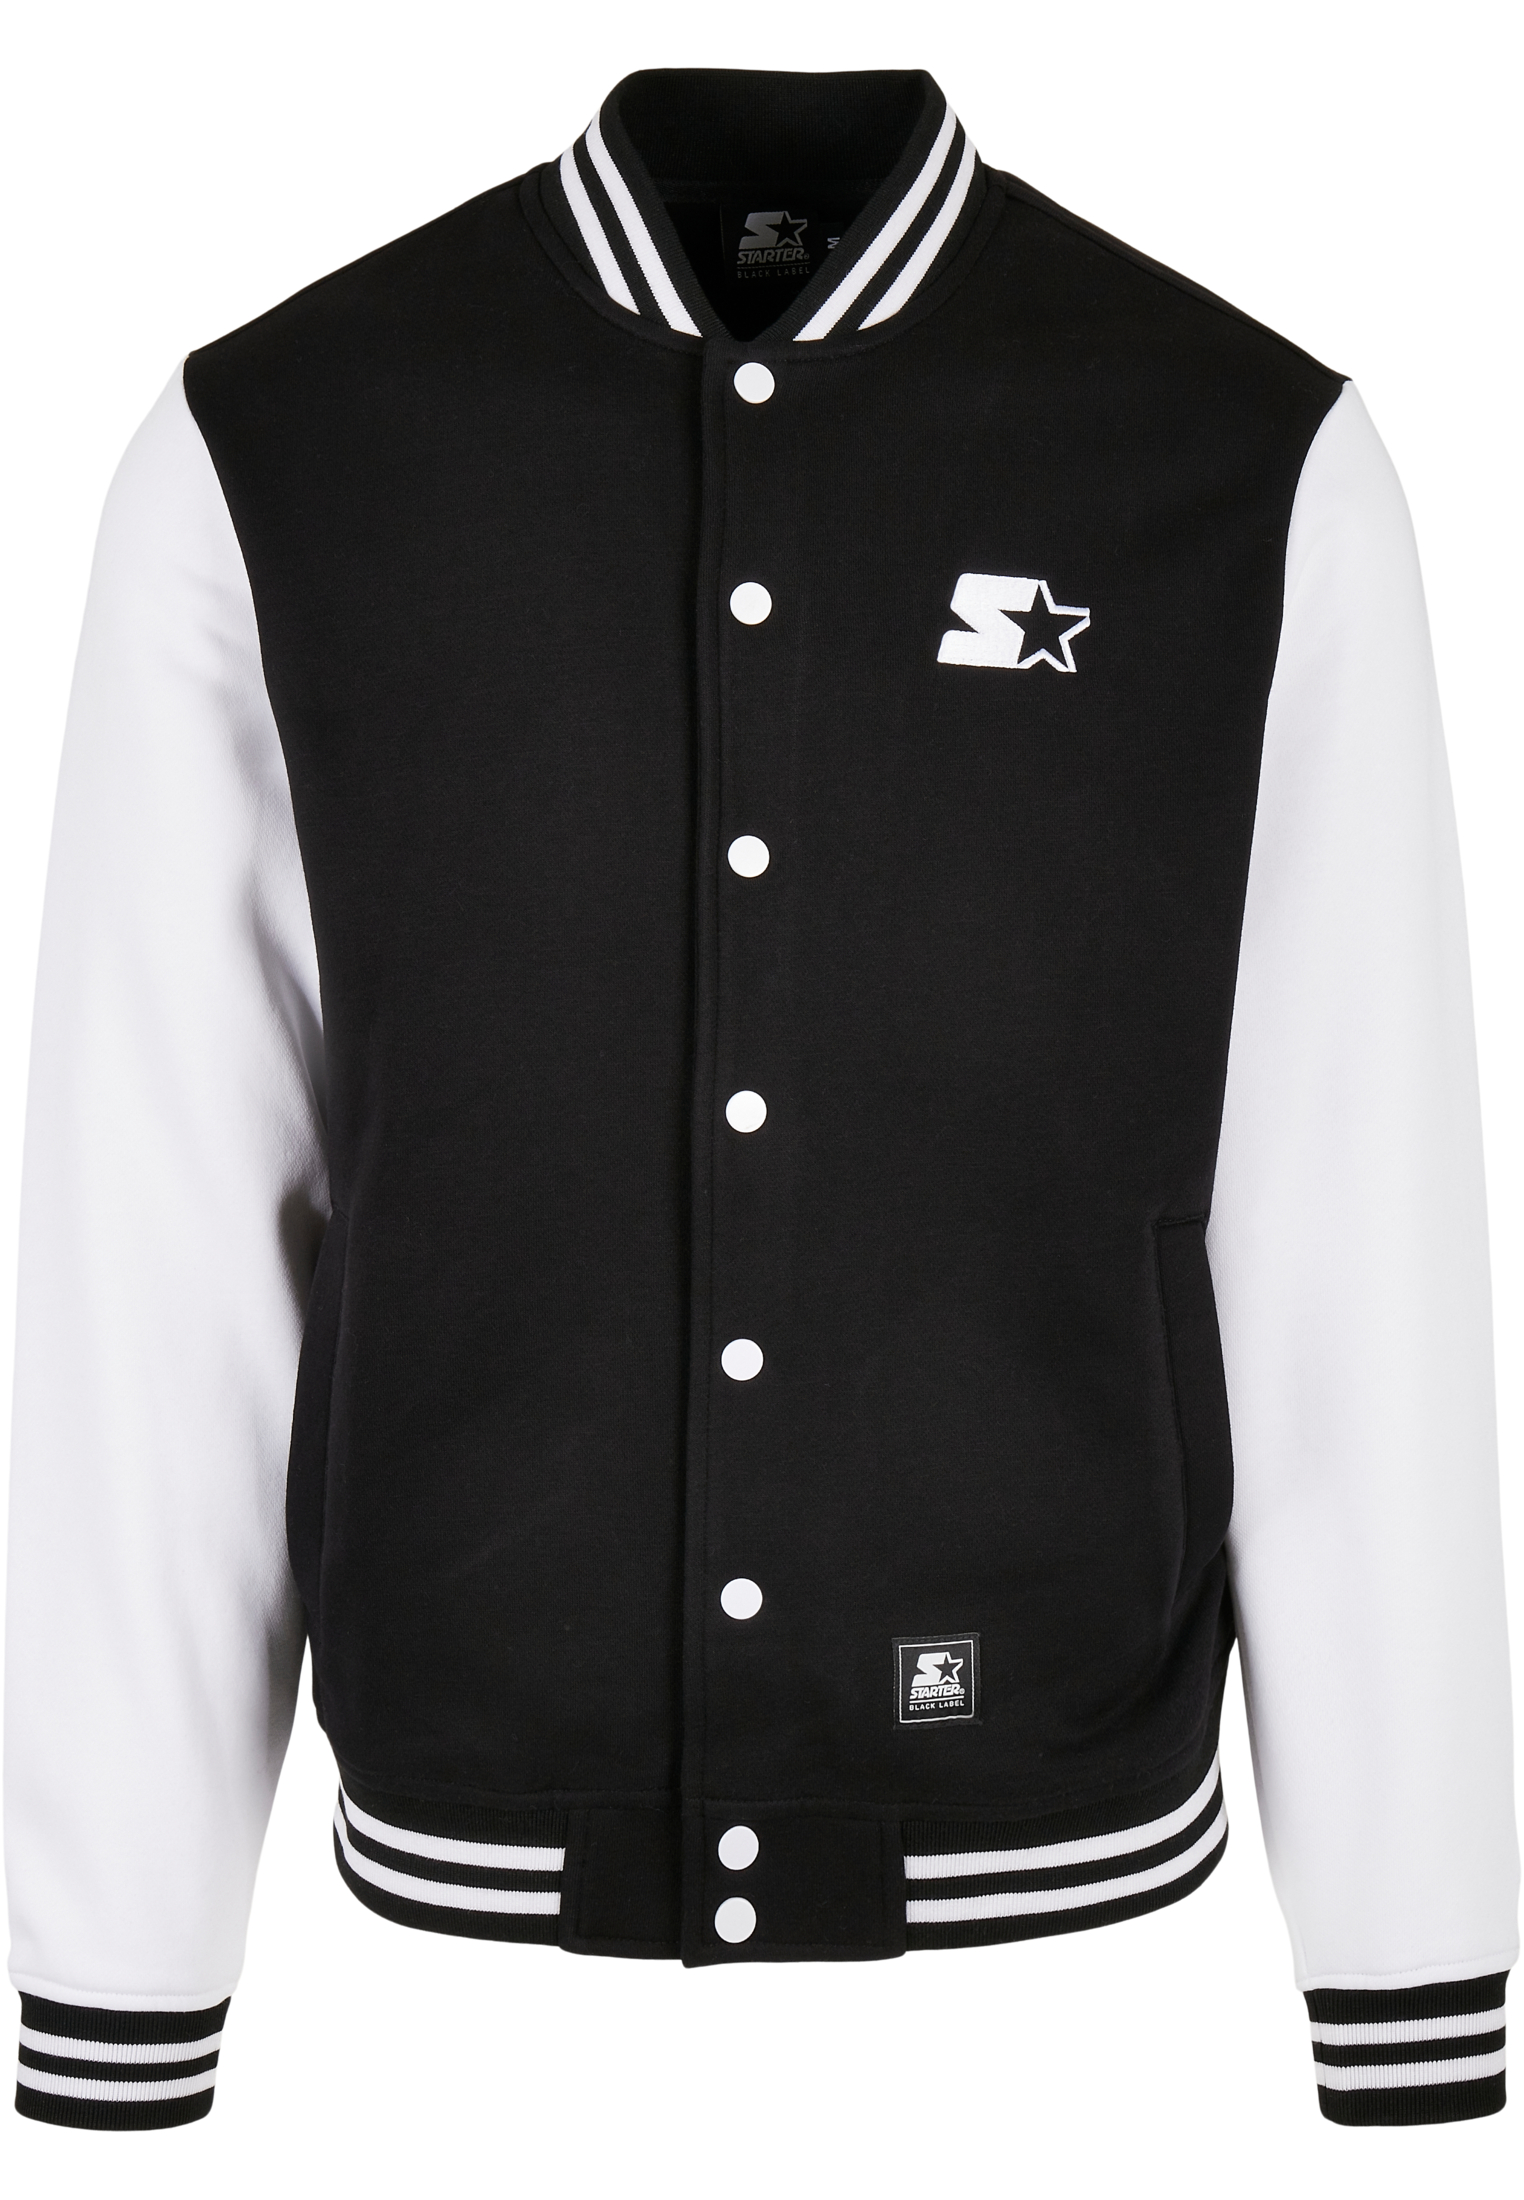 Starter College Fleece Jacket Black/White